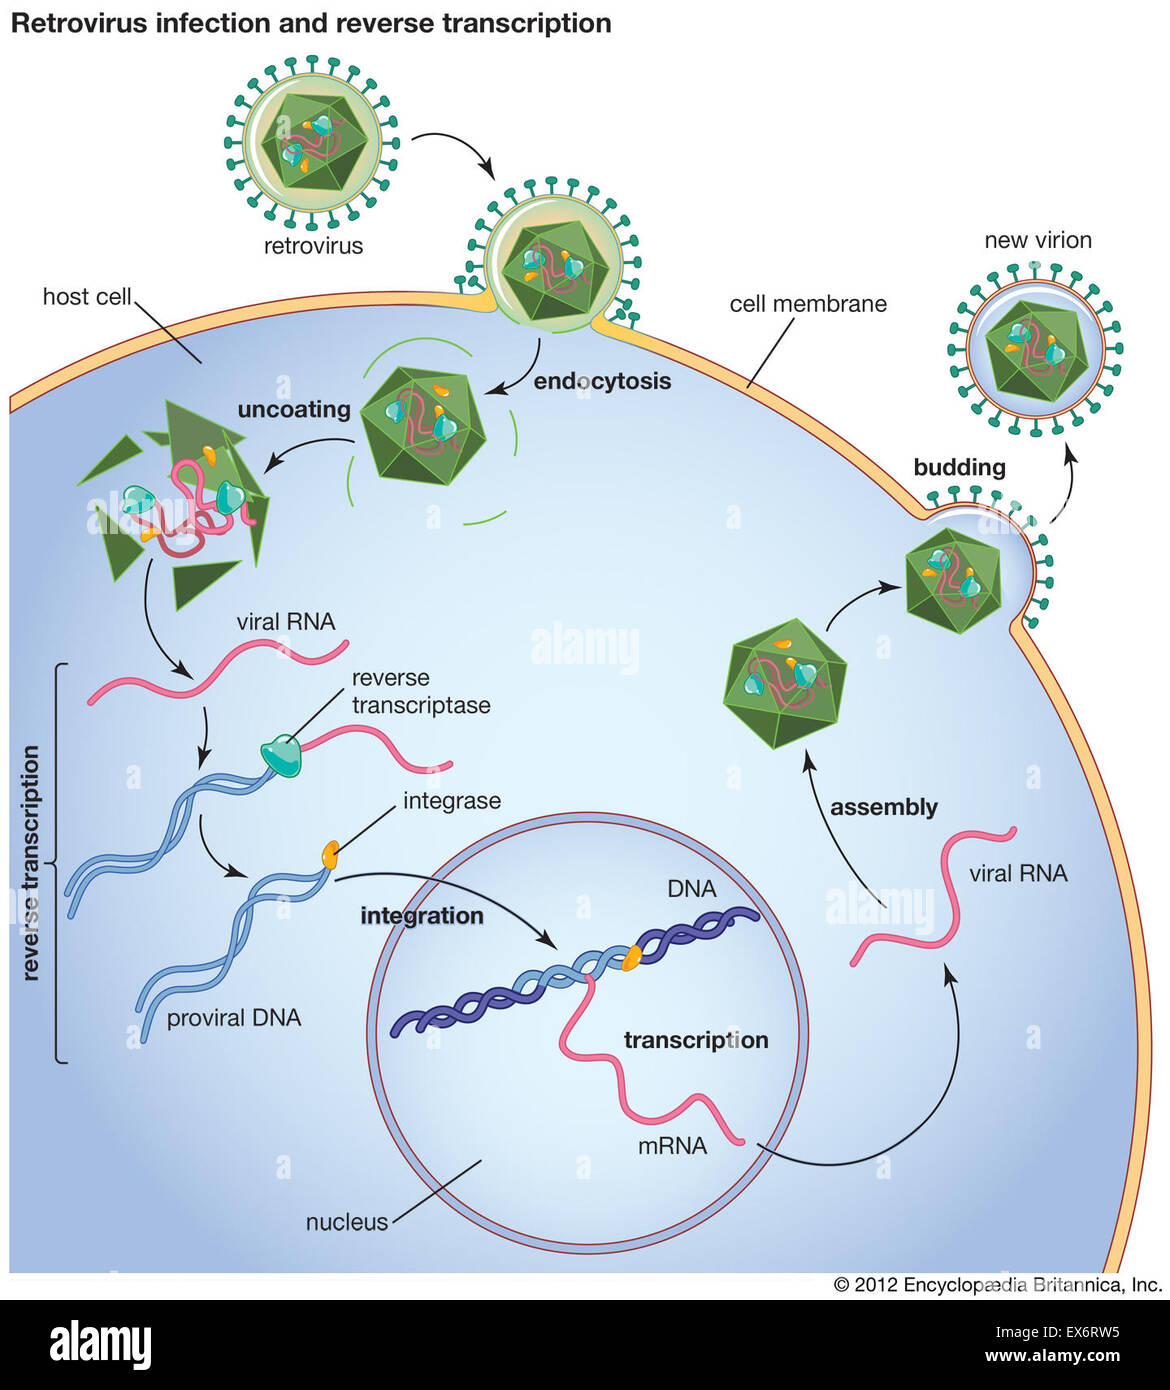 Retrovirus infection and reverse transcription Stock Photo